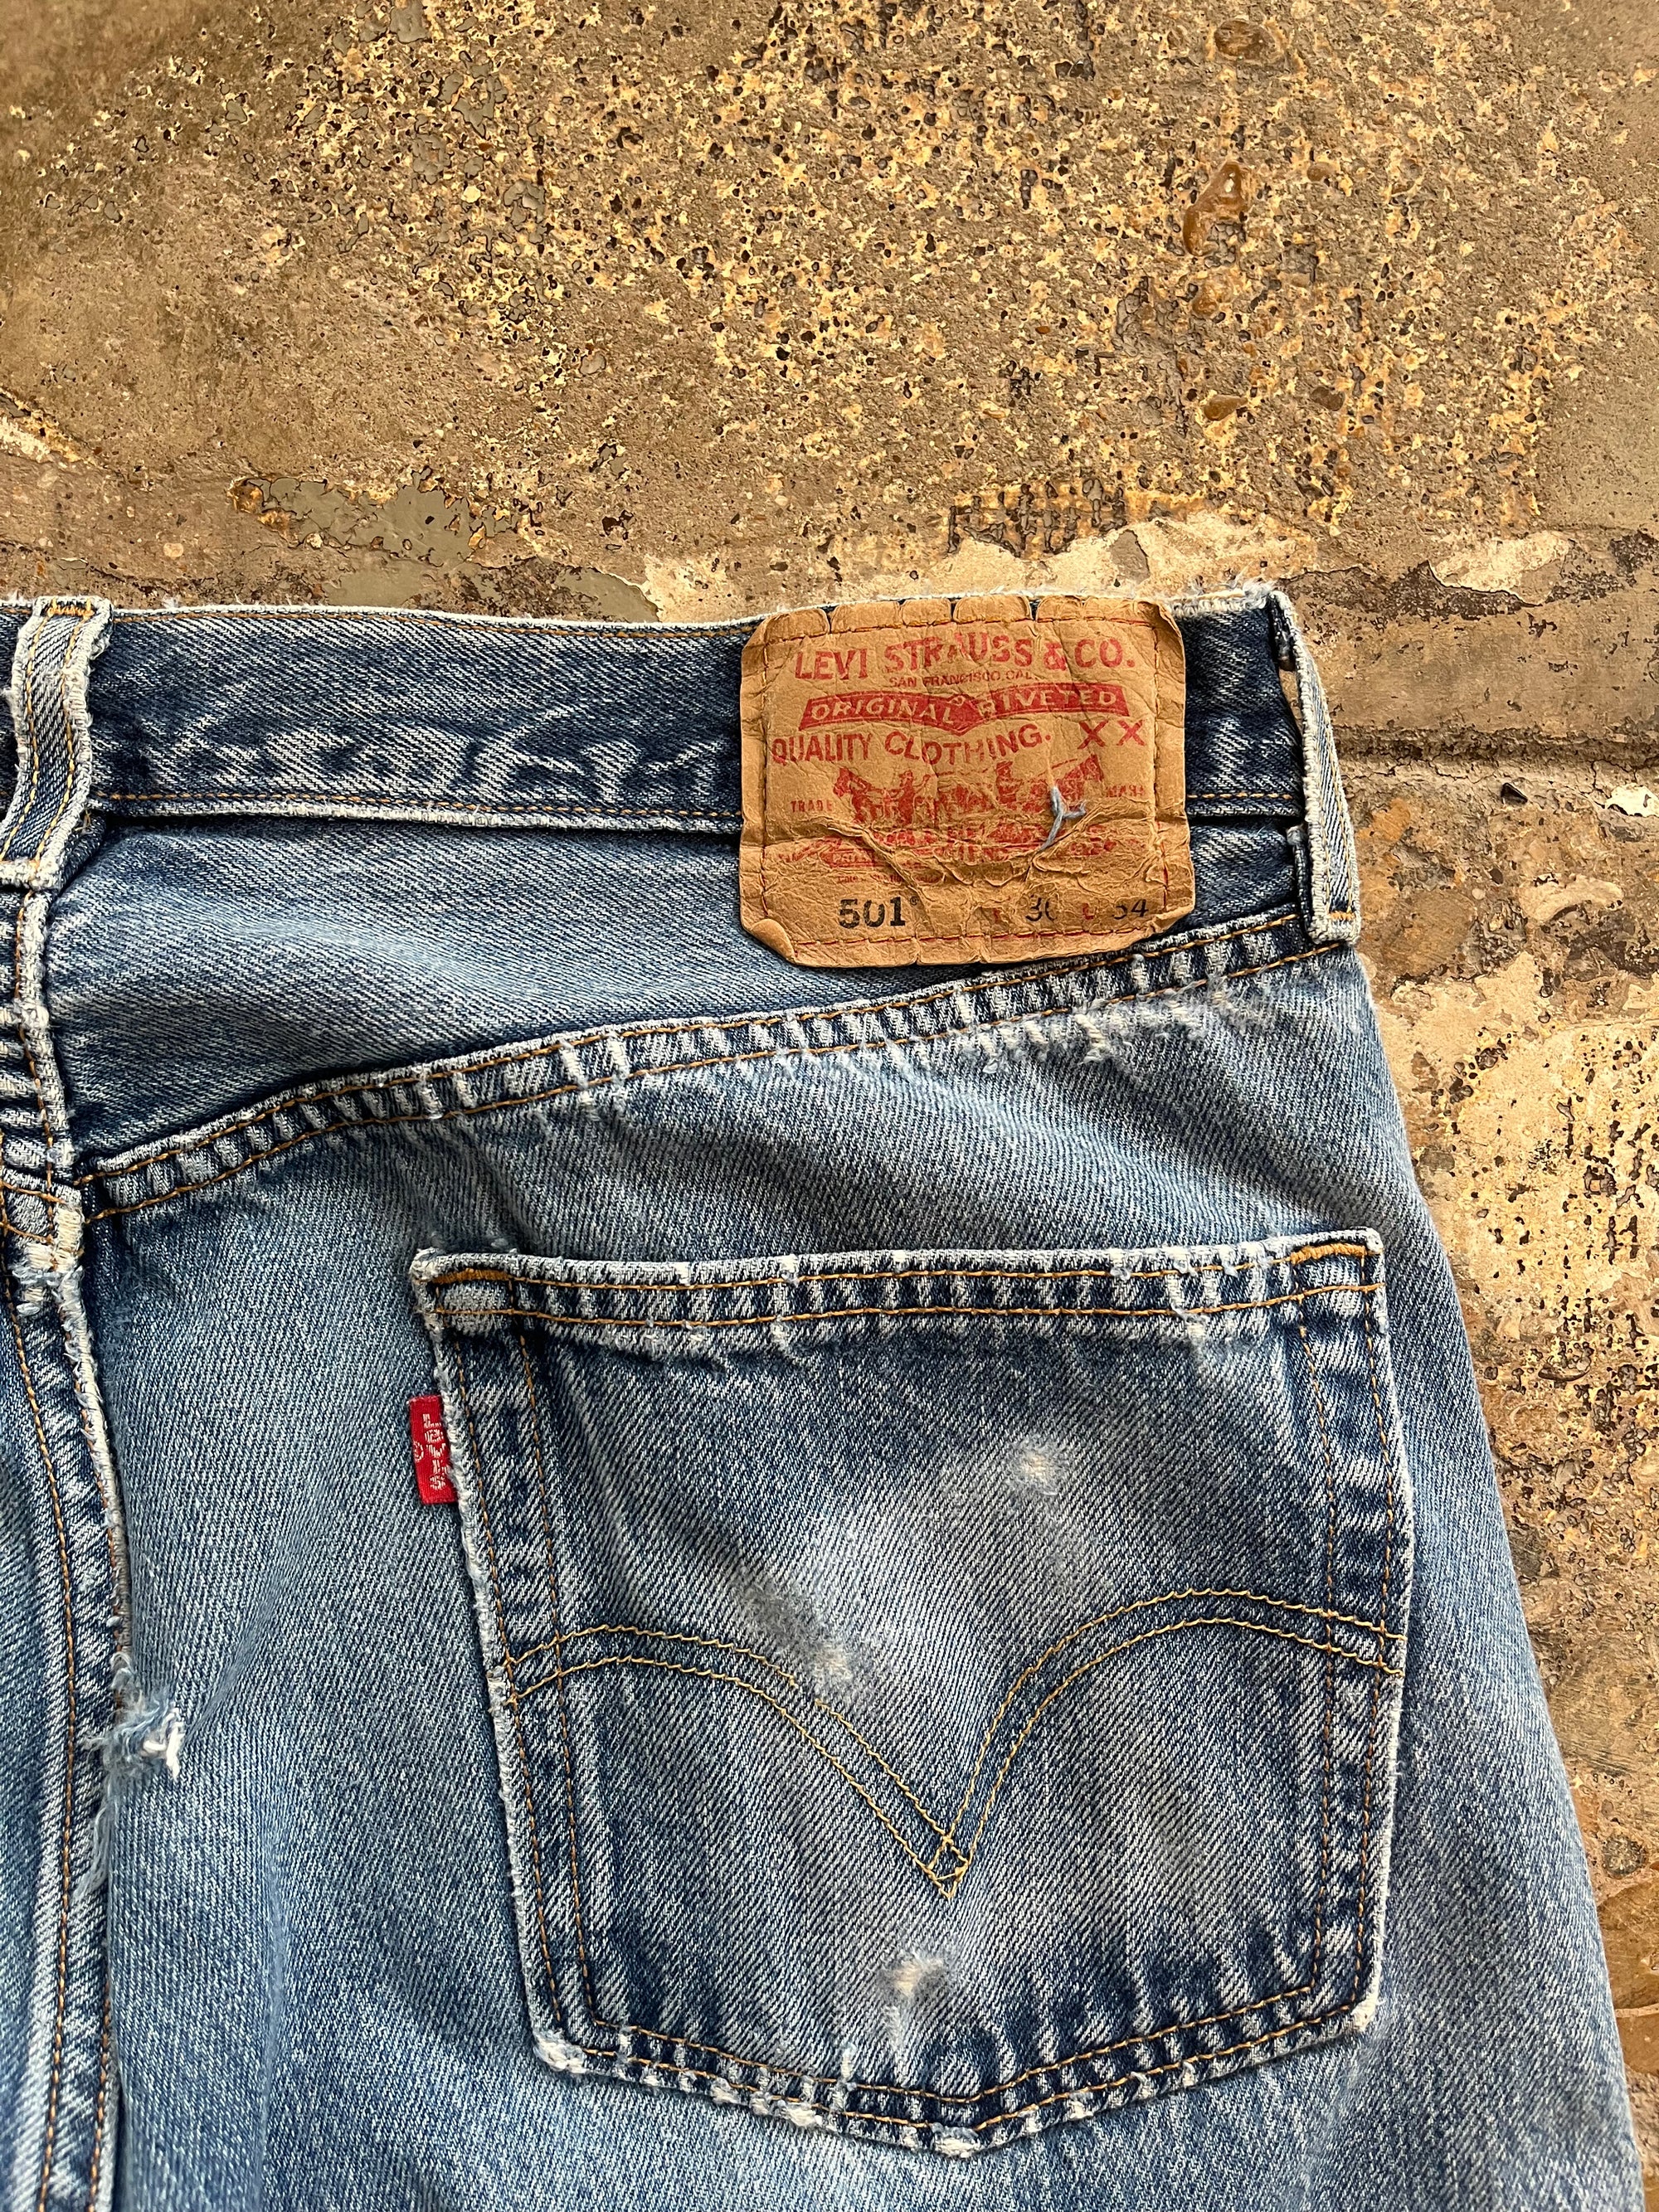 2003 Distressed 501 Levi Jeans